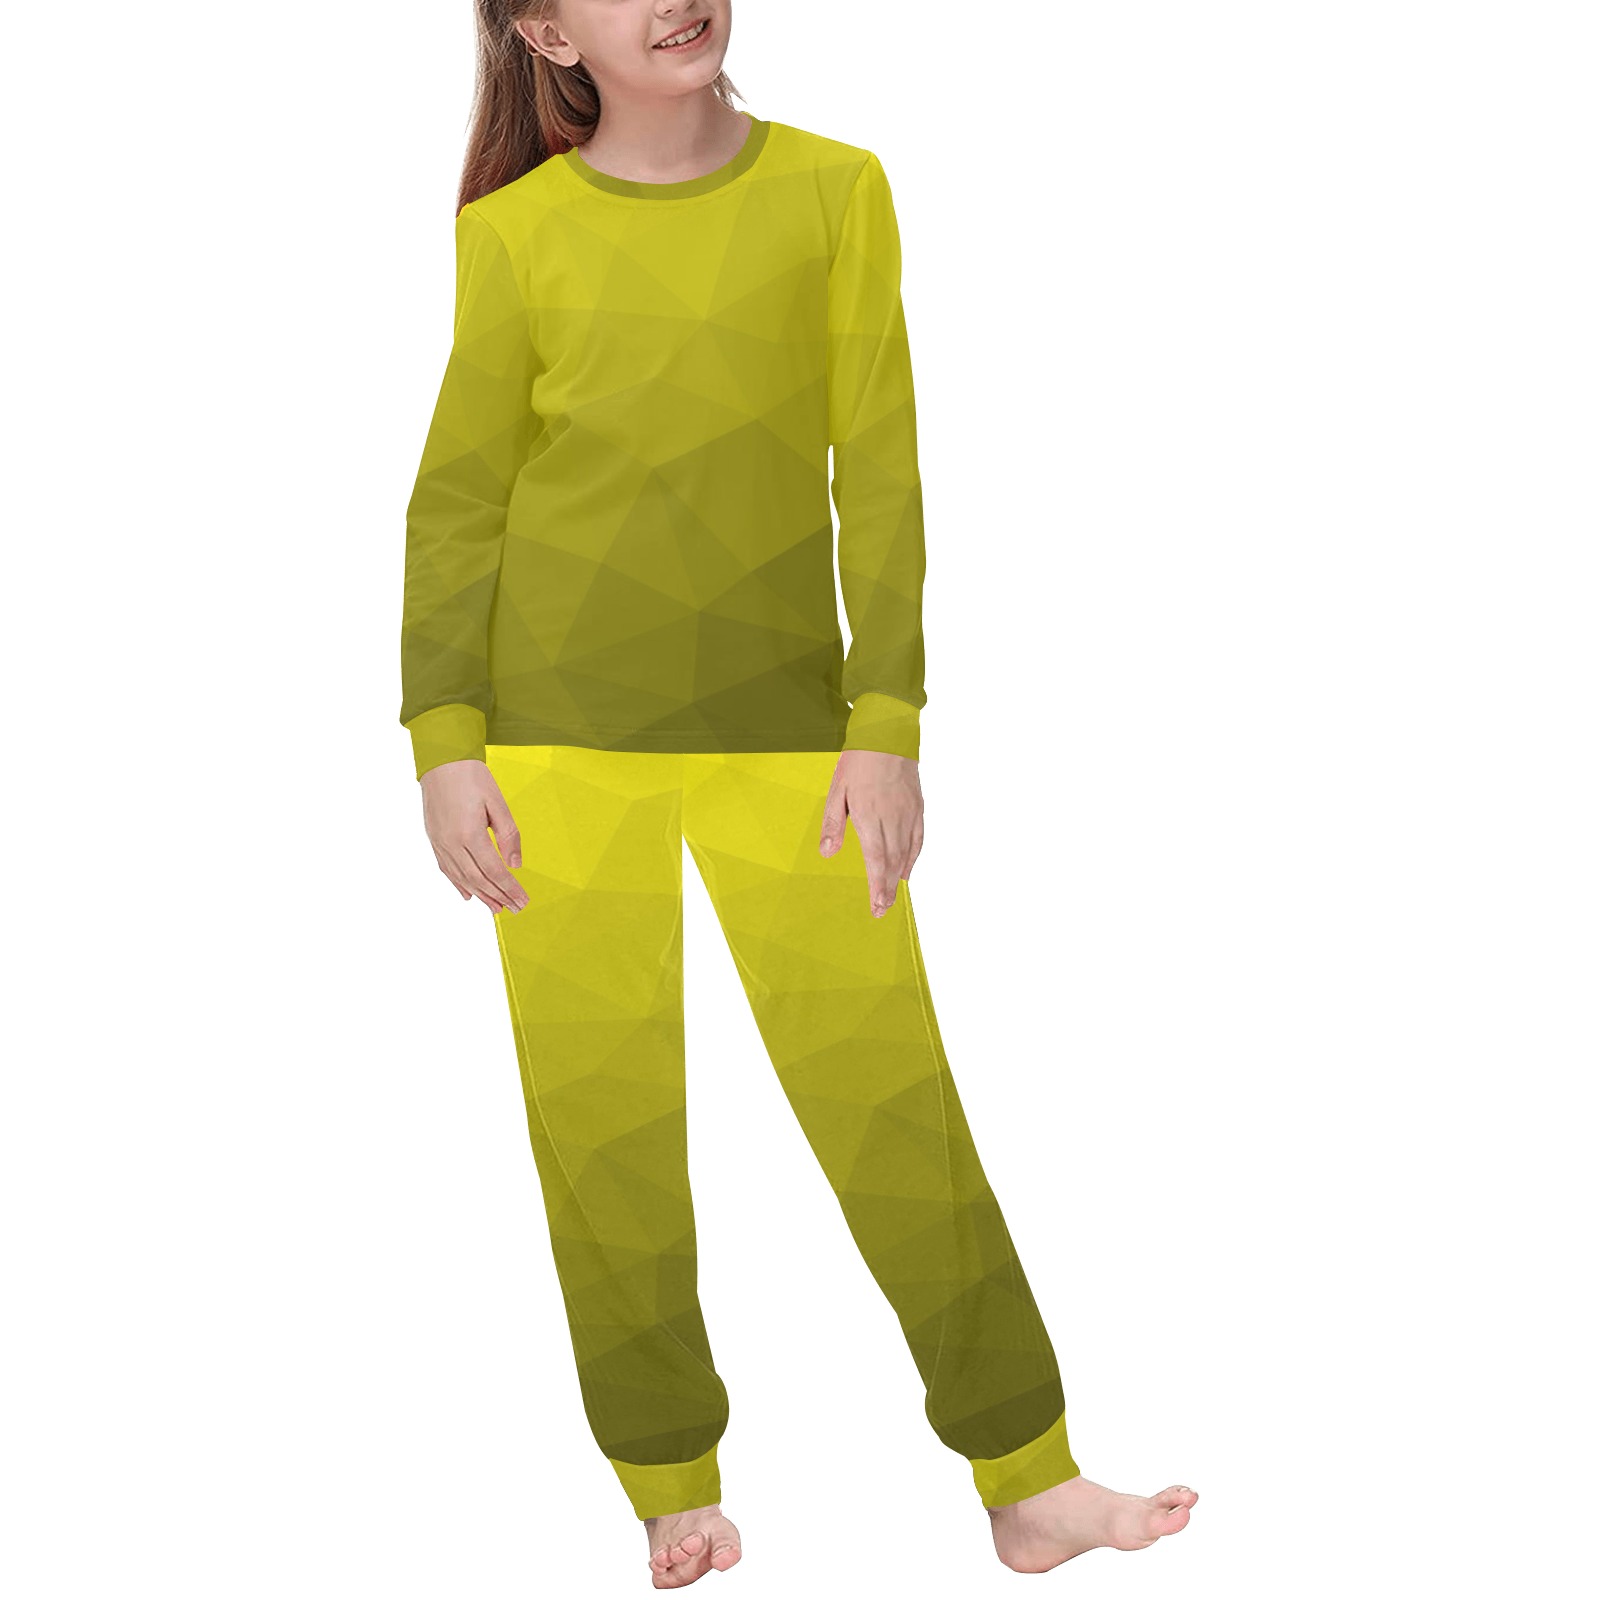 Yellow gradient geometric mesh pattern Kids' All Over Print Pajama Set